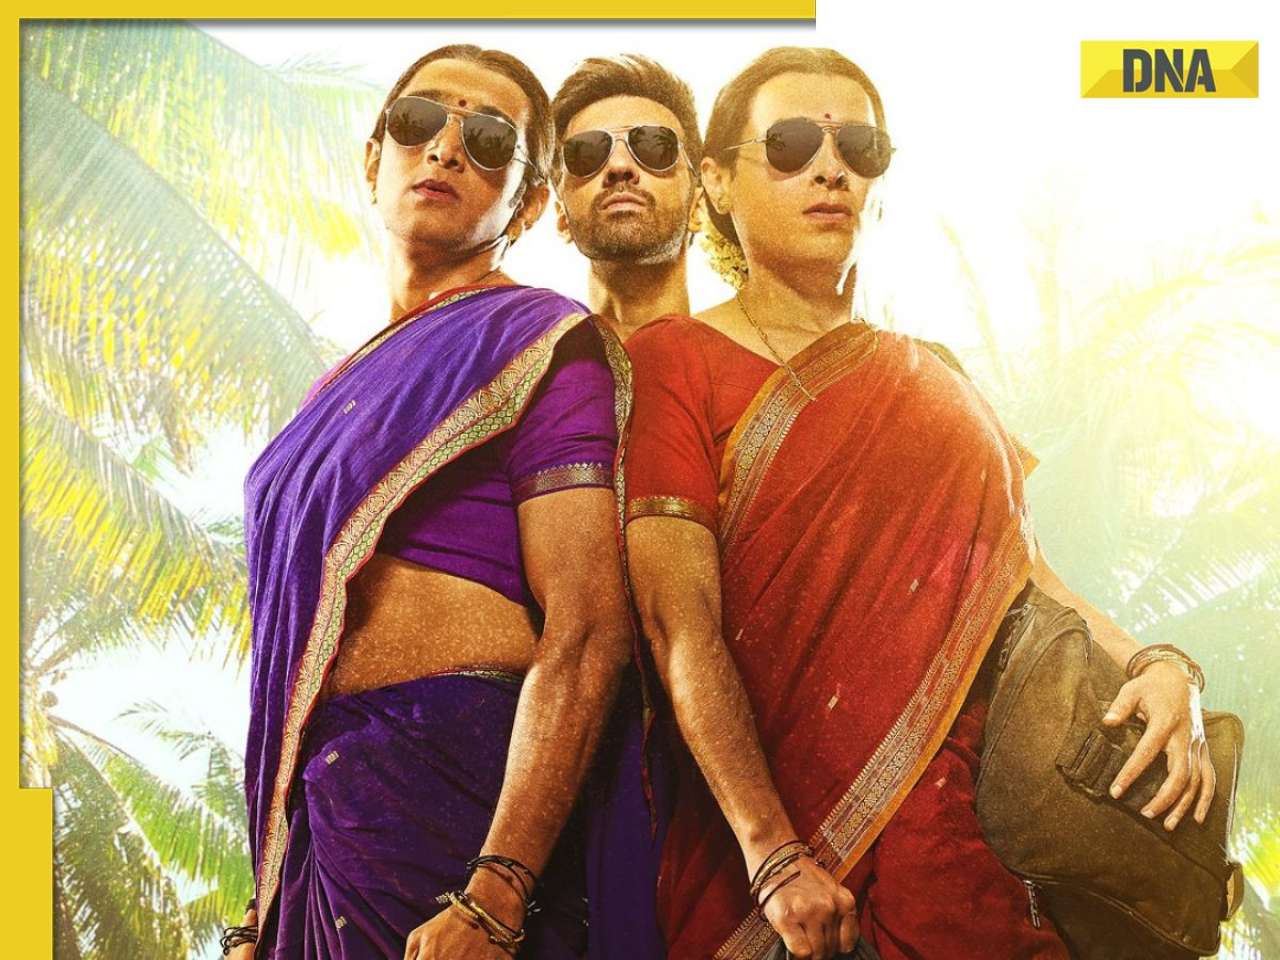 Madgaon Express movie review: Kunal Kemmu gives new lease to comedy genre with Divyenndu, Pratik, Avinash's laugh riot